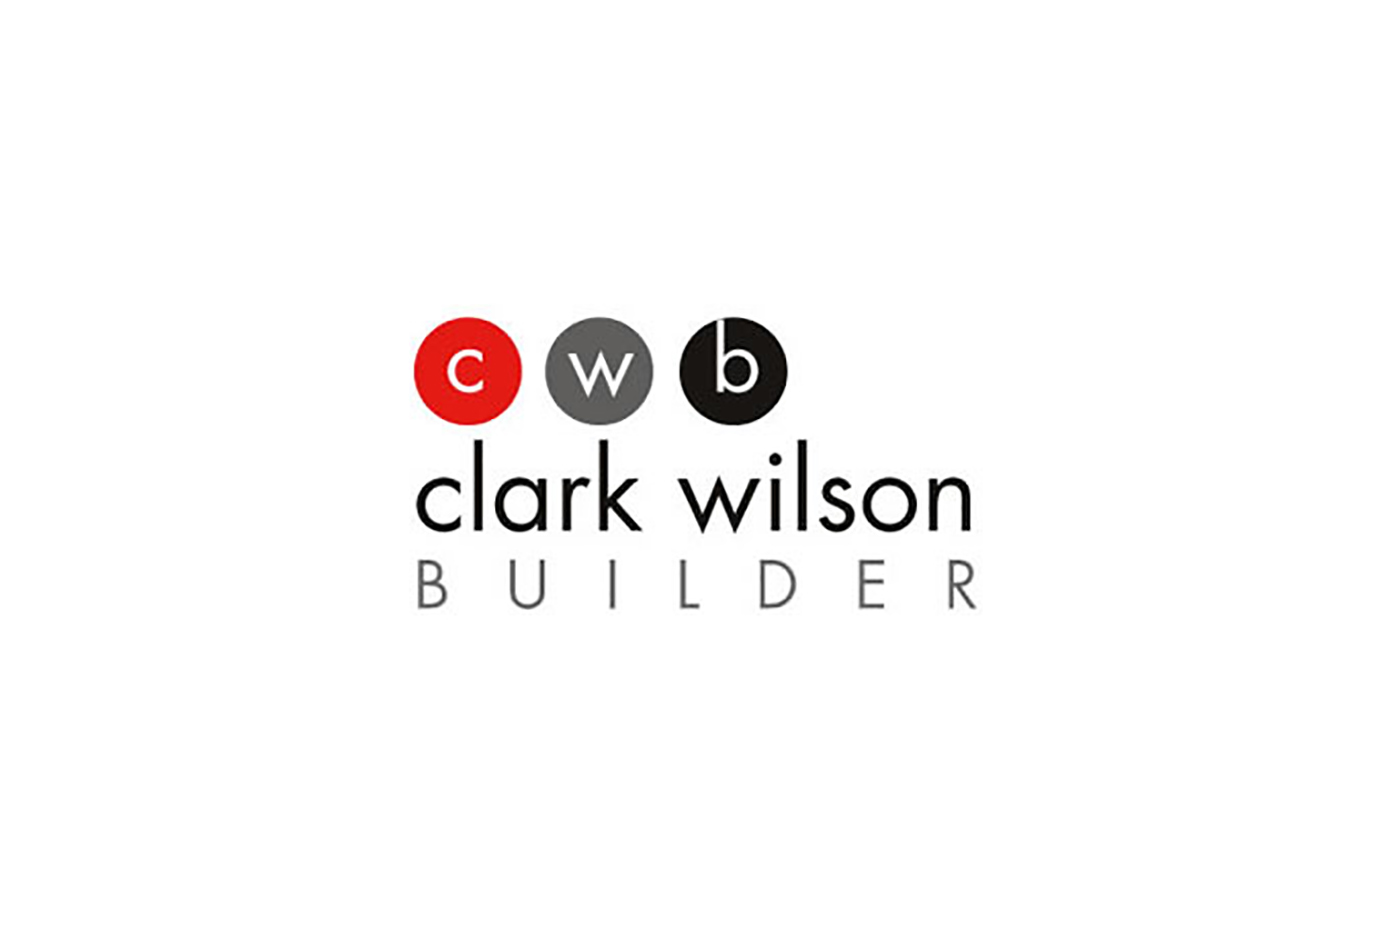 clark wilson builder logo image